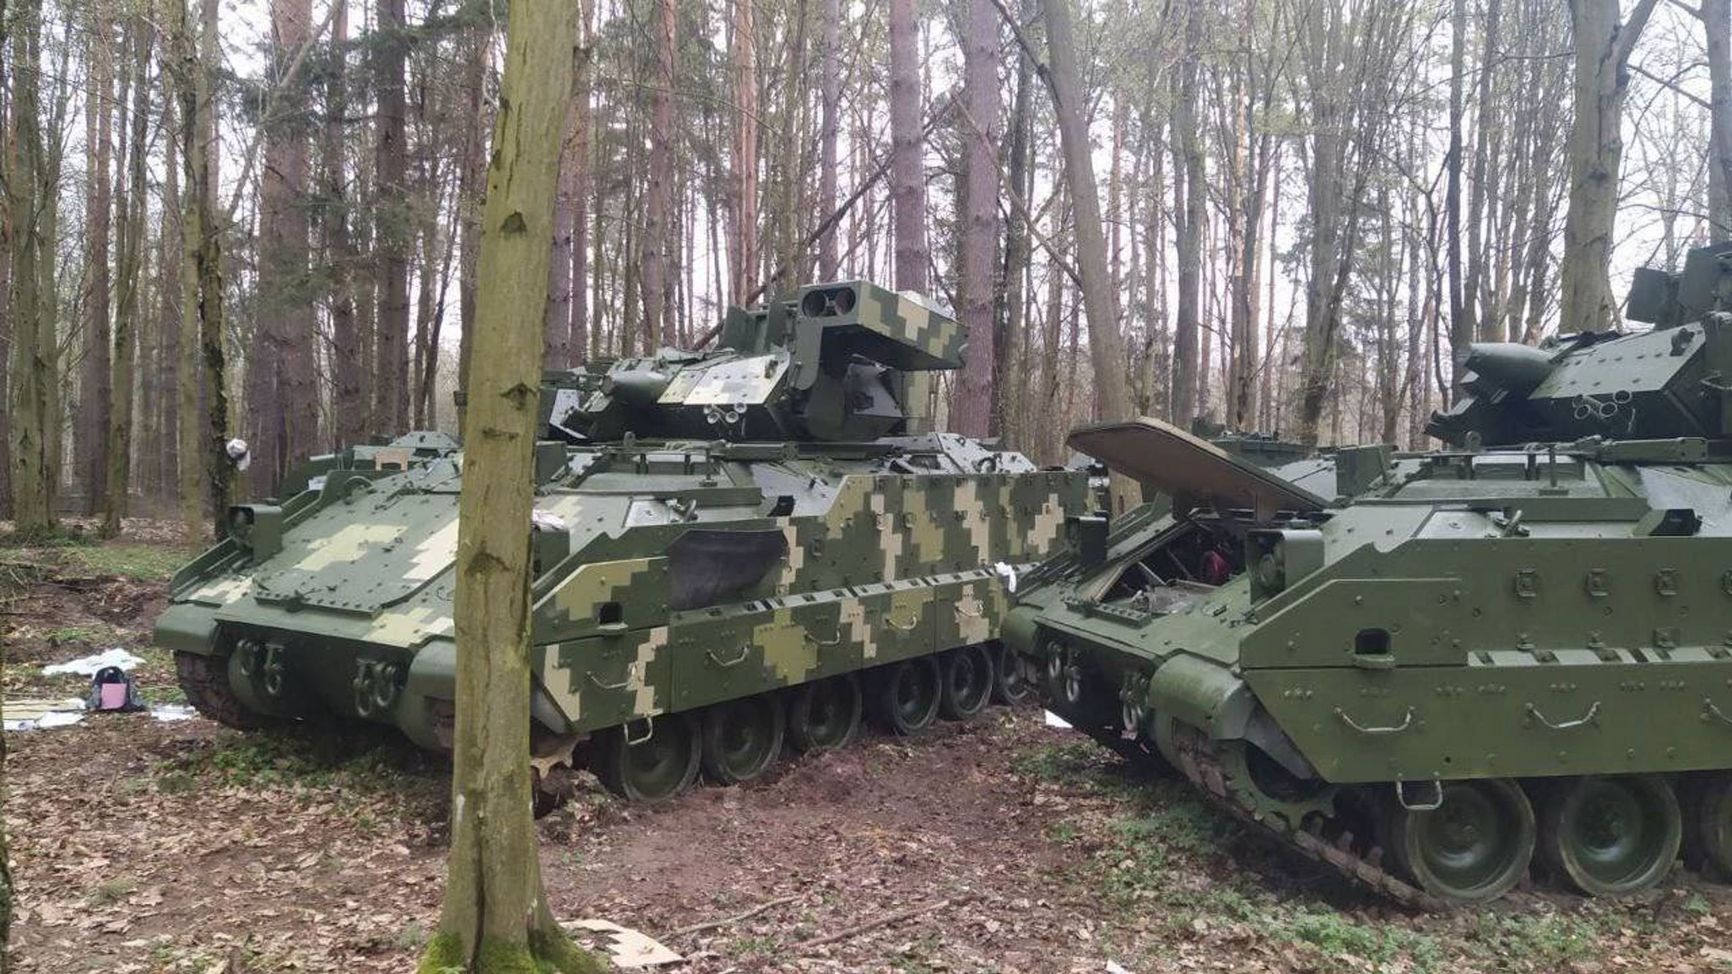 American Bradley infantry fighting vehicles (IFVs) in Ukrainian camouflage